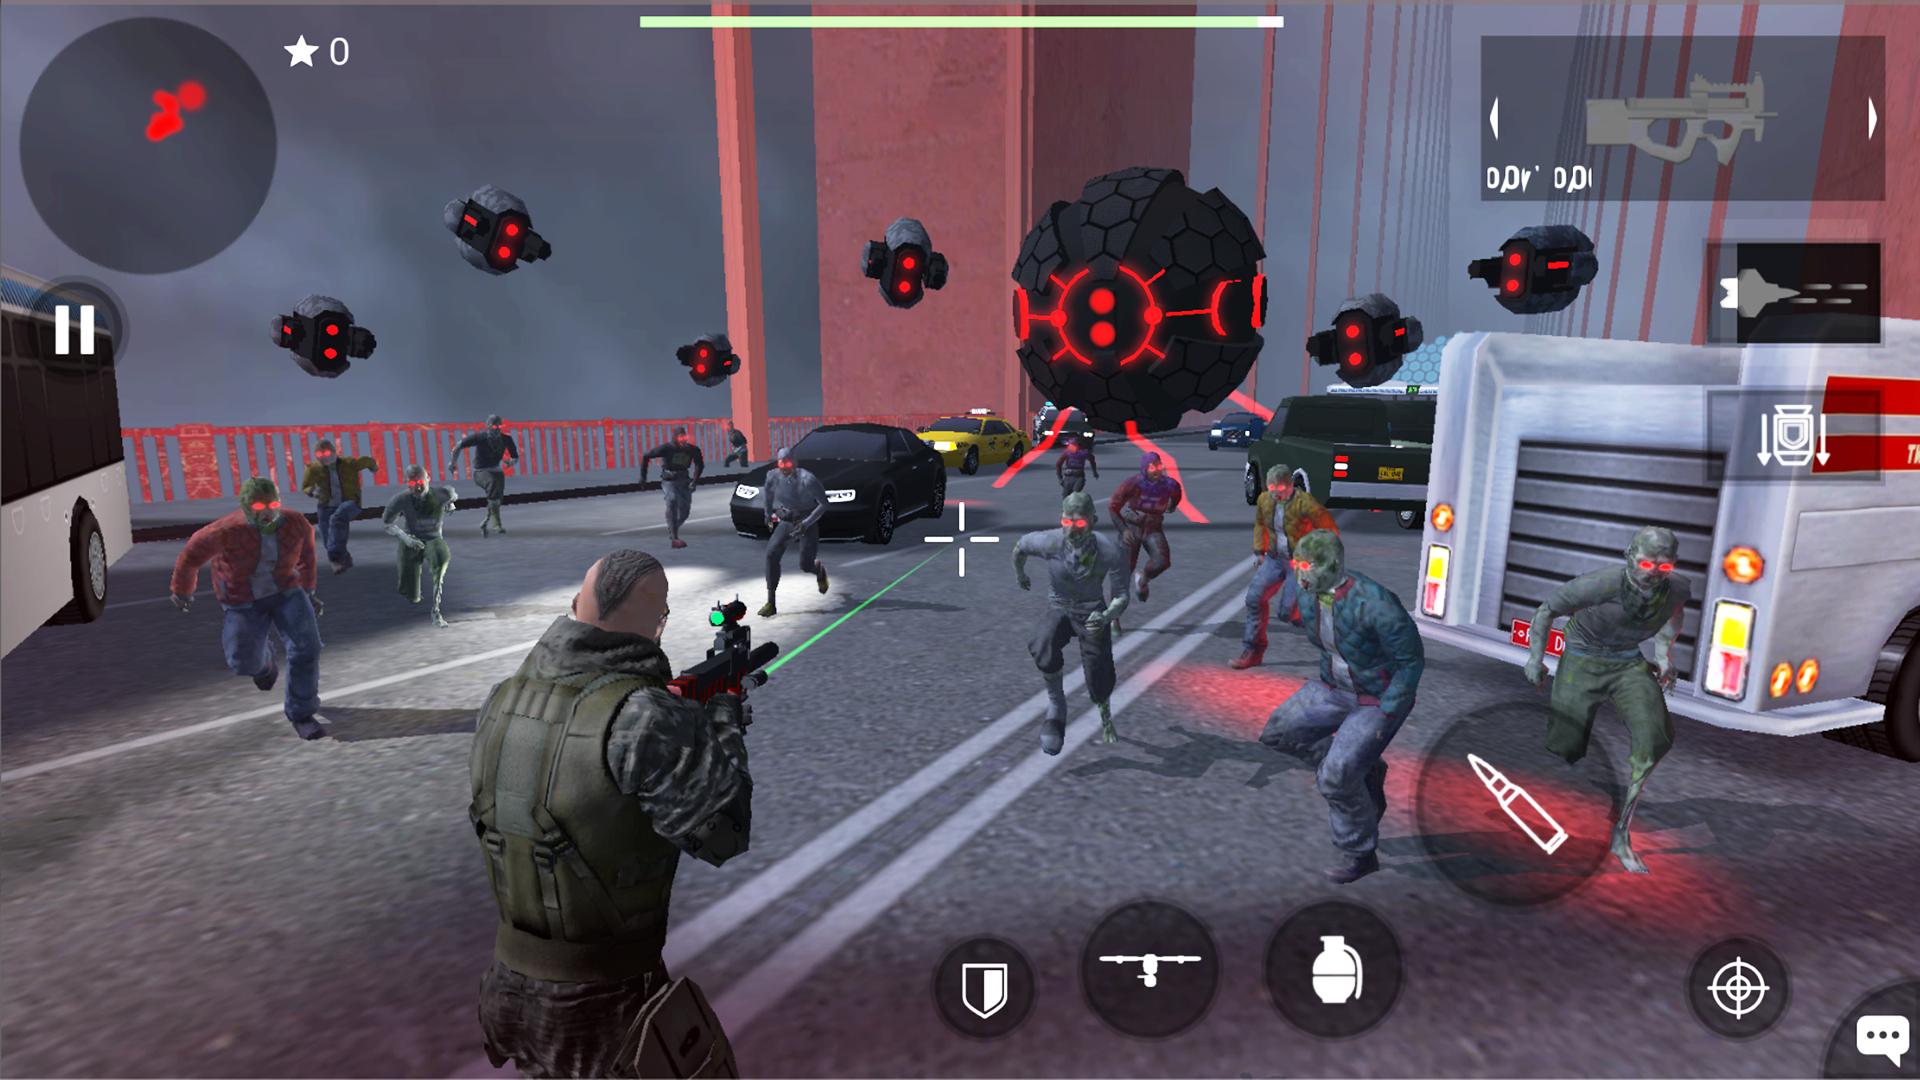 Earth Protect Squad Third Person Shooting Game 2.00.32b Screenshot 6